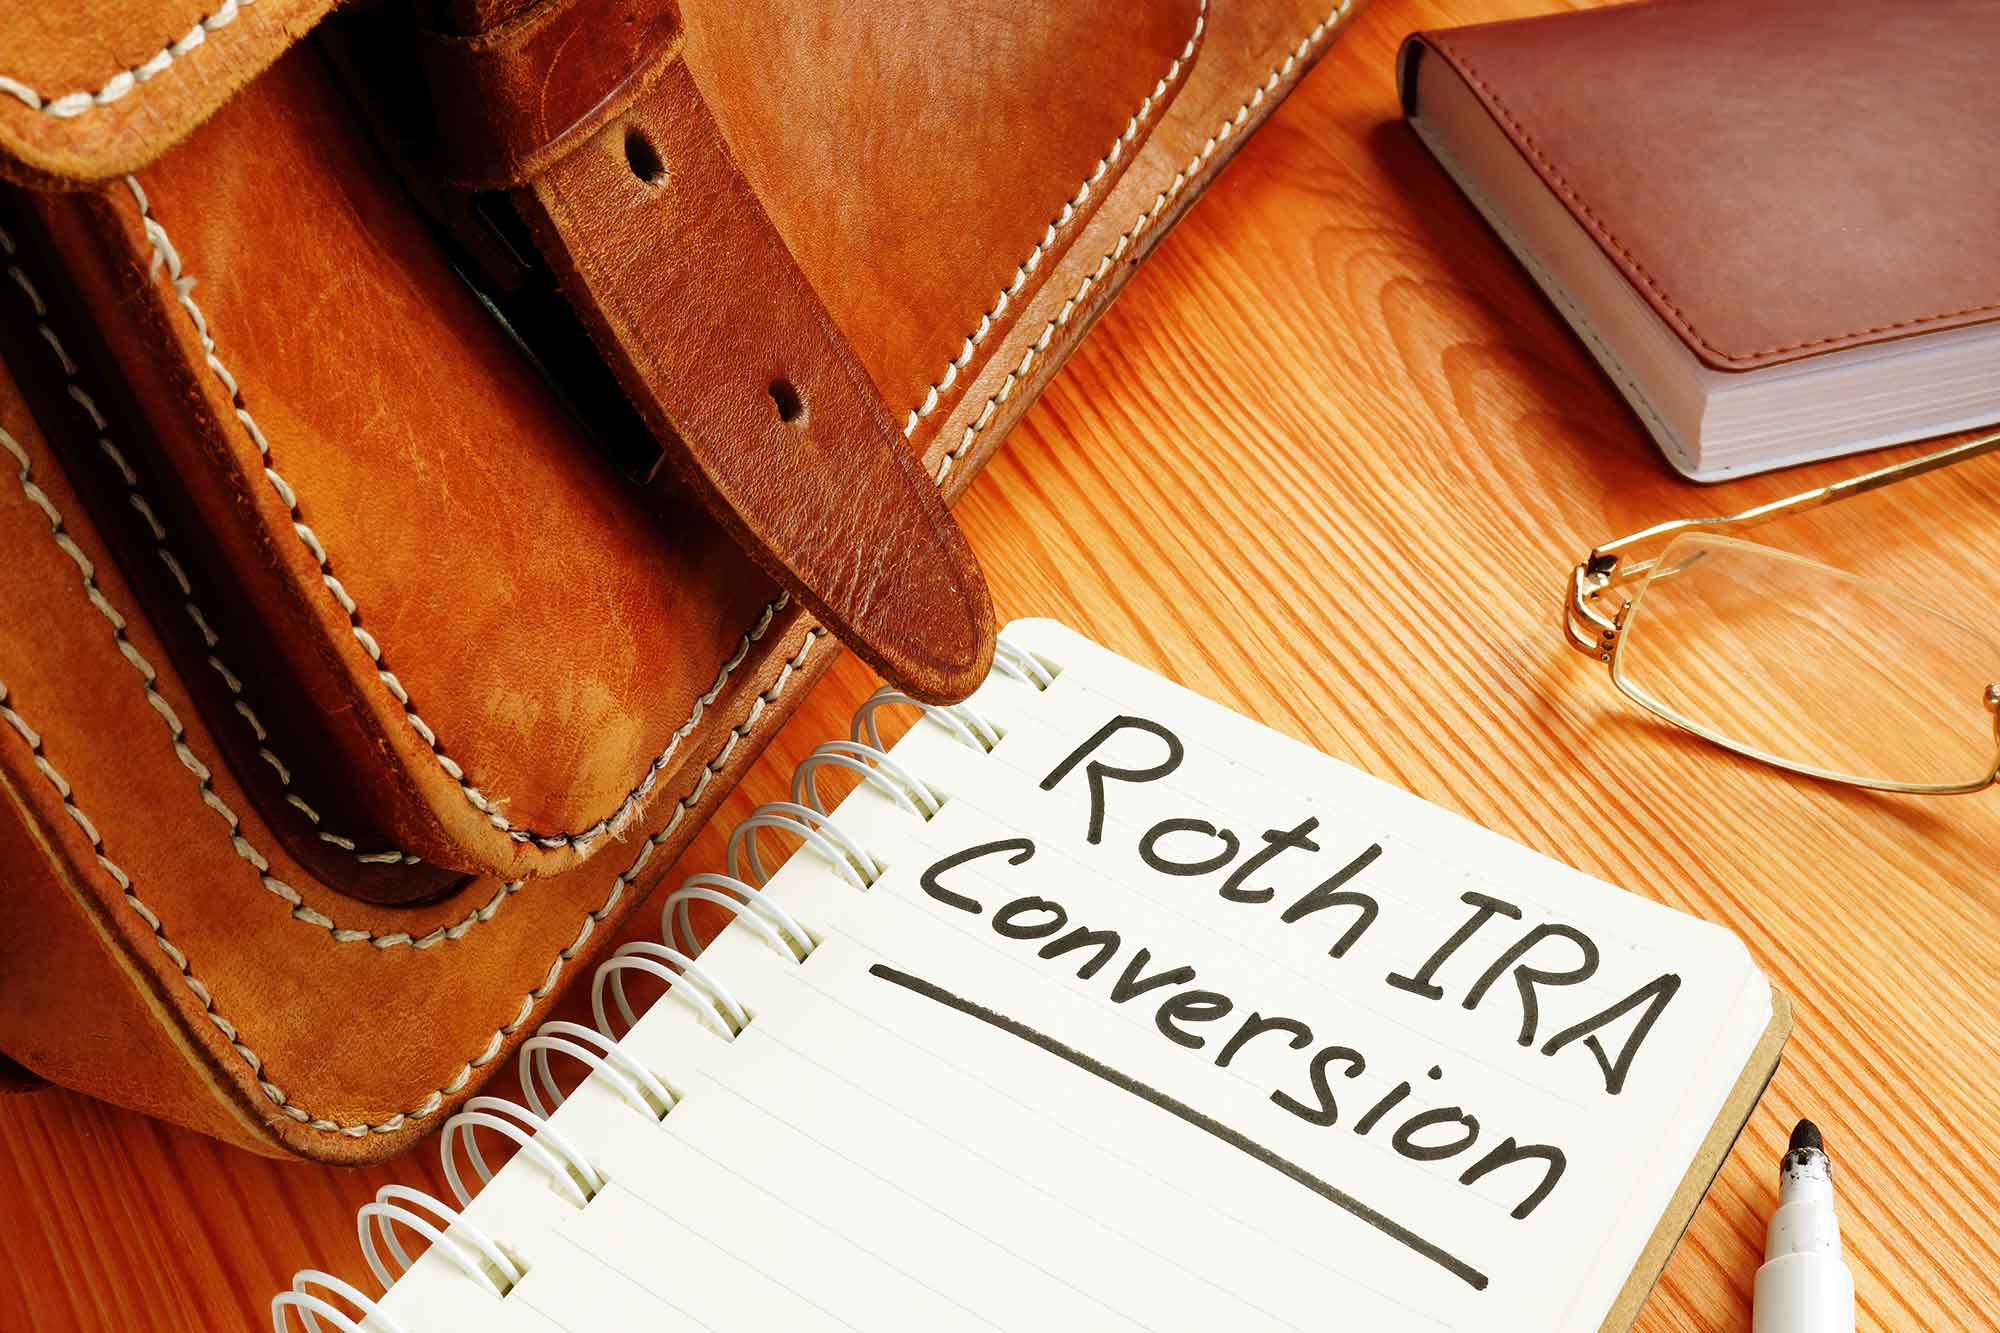 Roth RIA Conversions